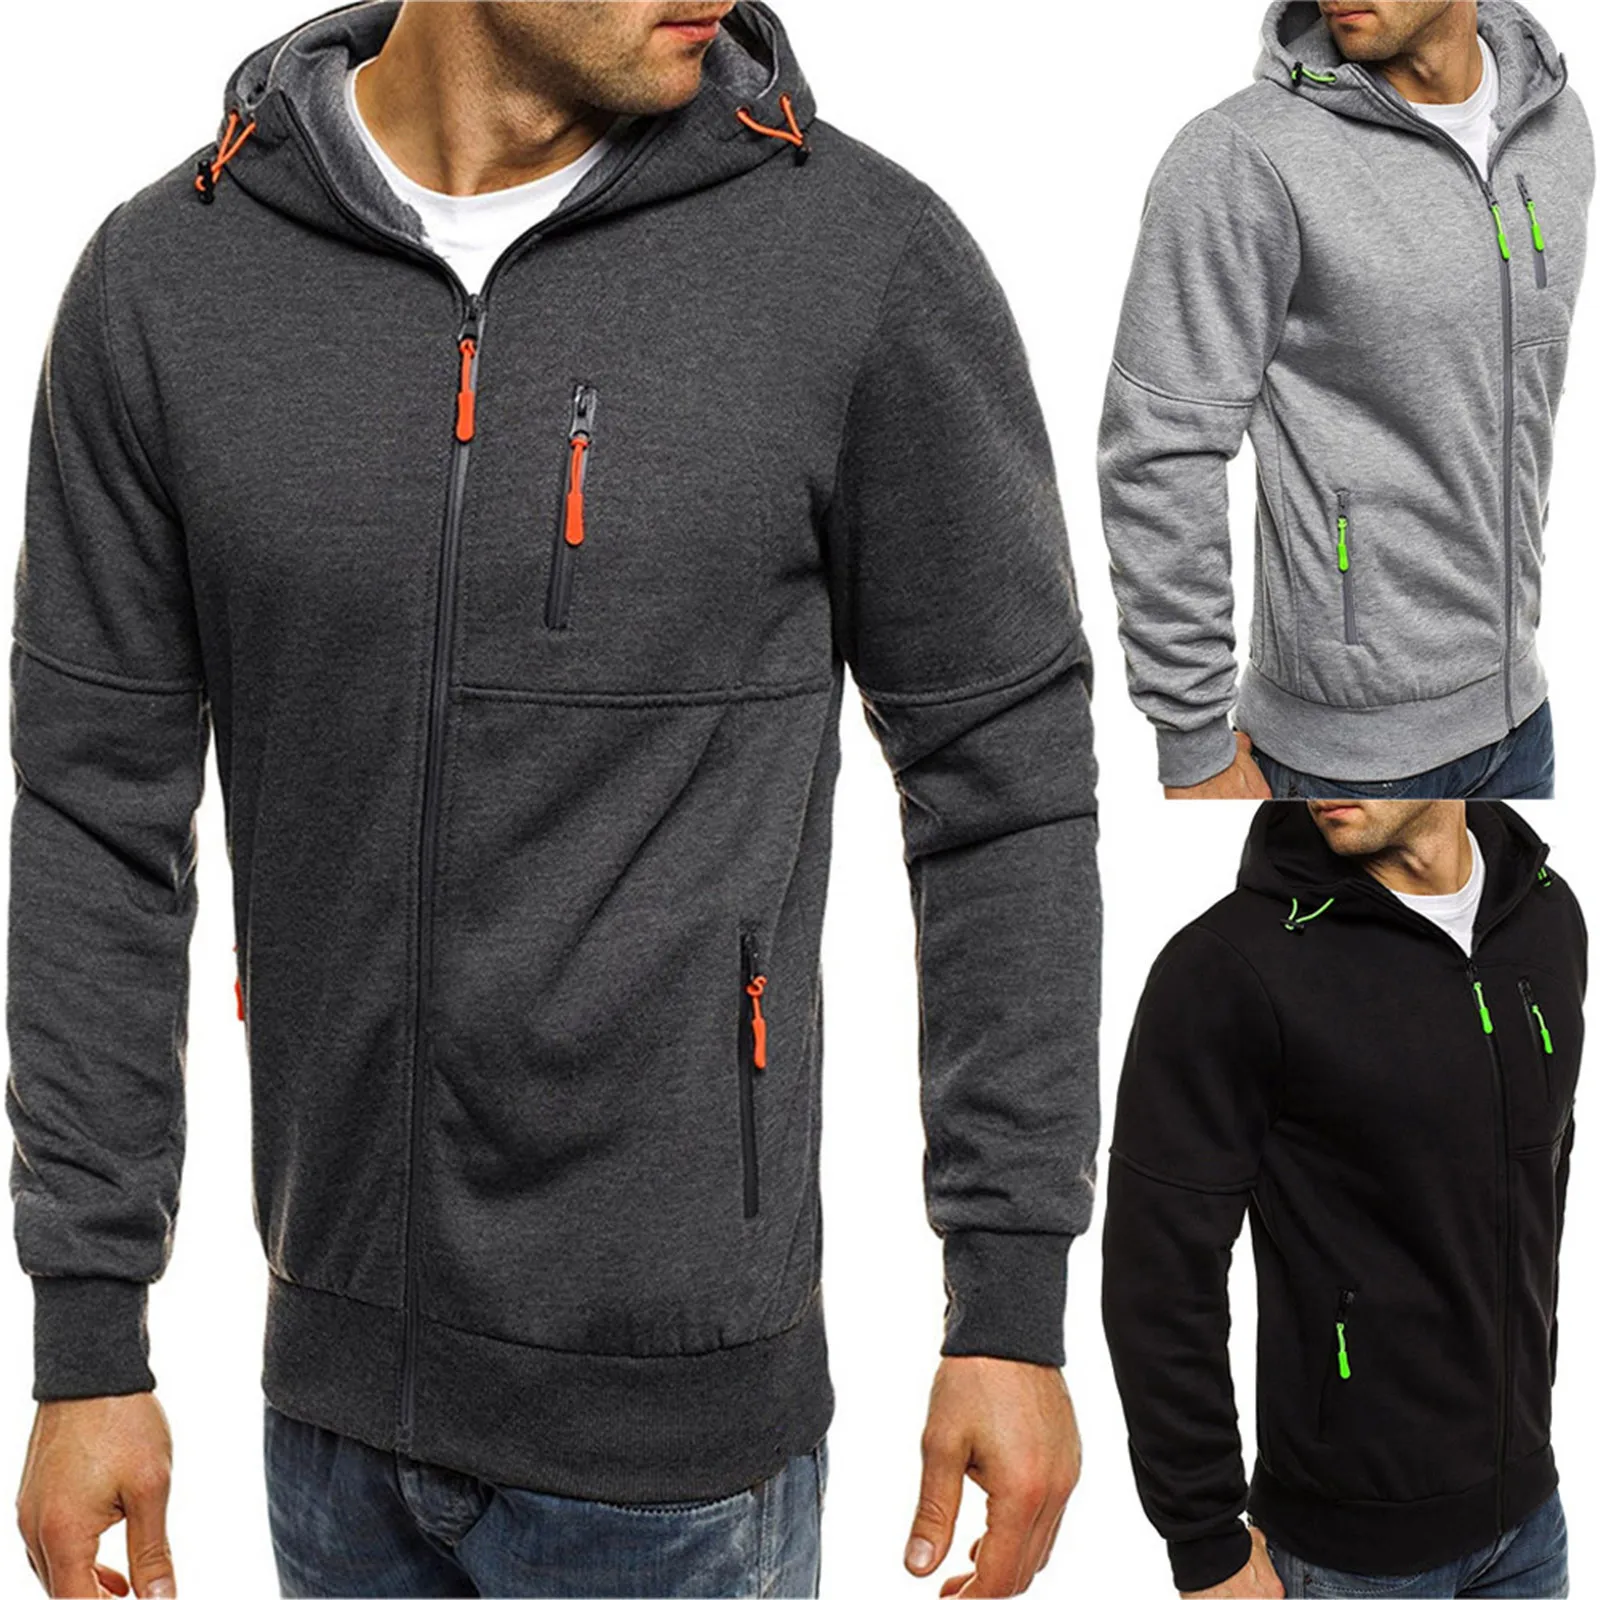 GRT Fitness Hb288a169dc73477cbe08684752bf92b8S New 2021 Men's Splice Cap with Long Sleeve Zip Sweater Tops Sweatshirt Outwear Warm Hoodie  